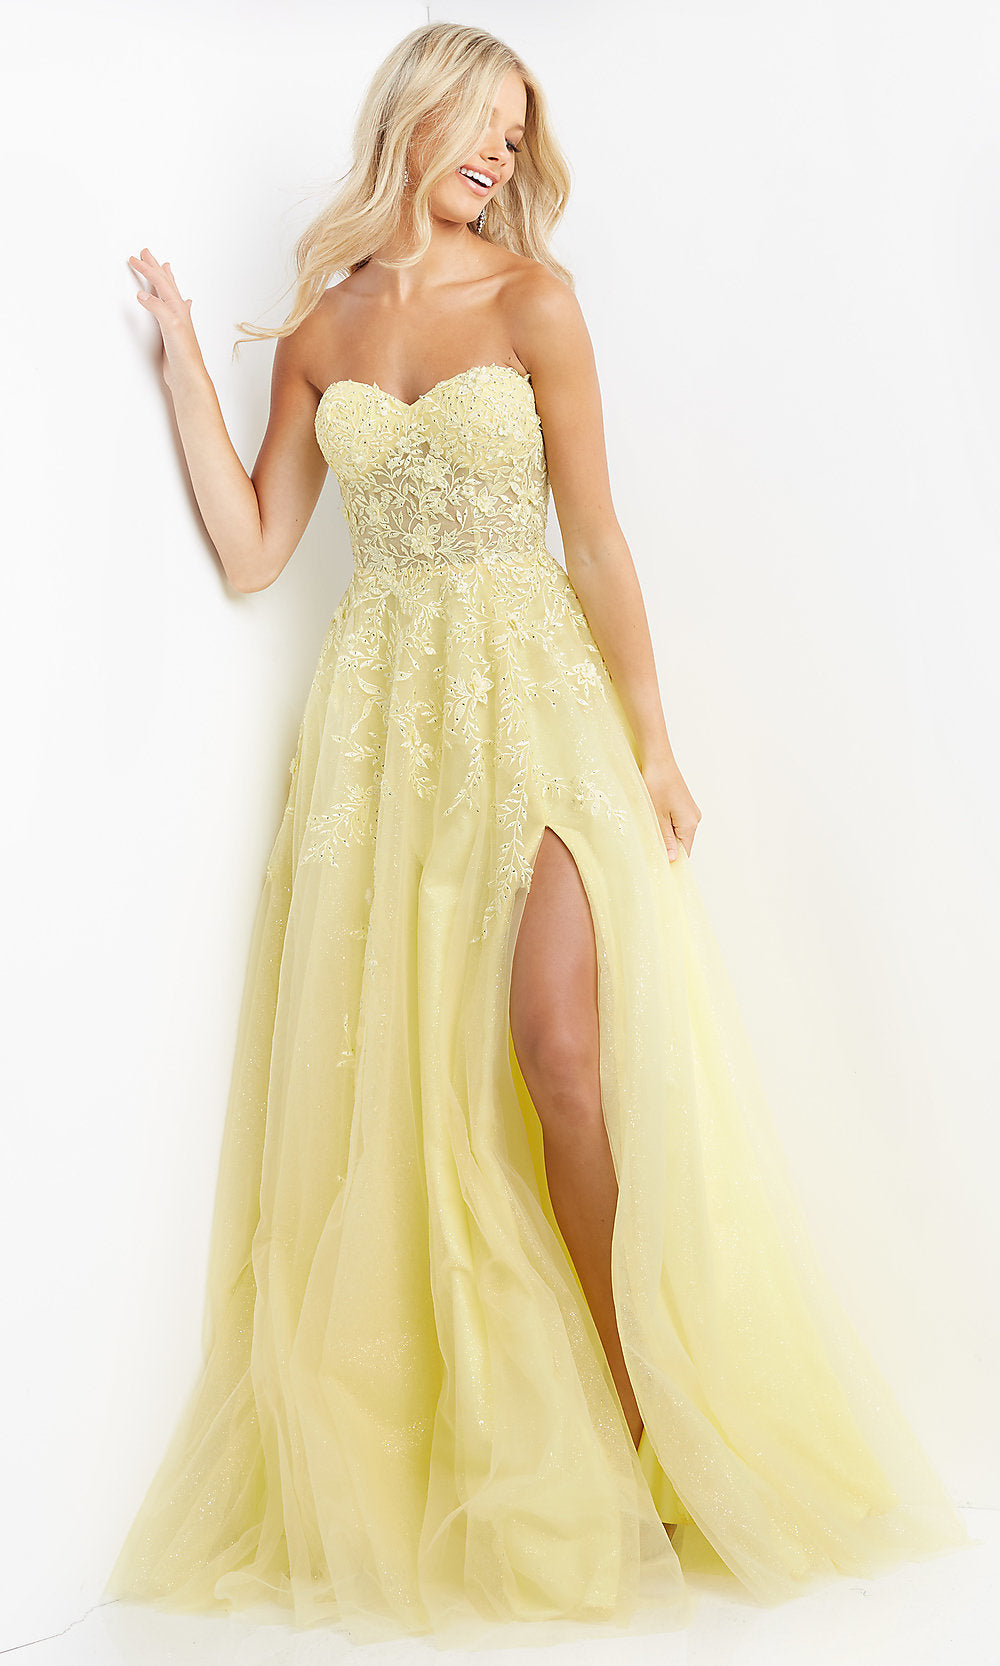 Luxury glittery yellow ballgown s/m | Lazada PH